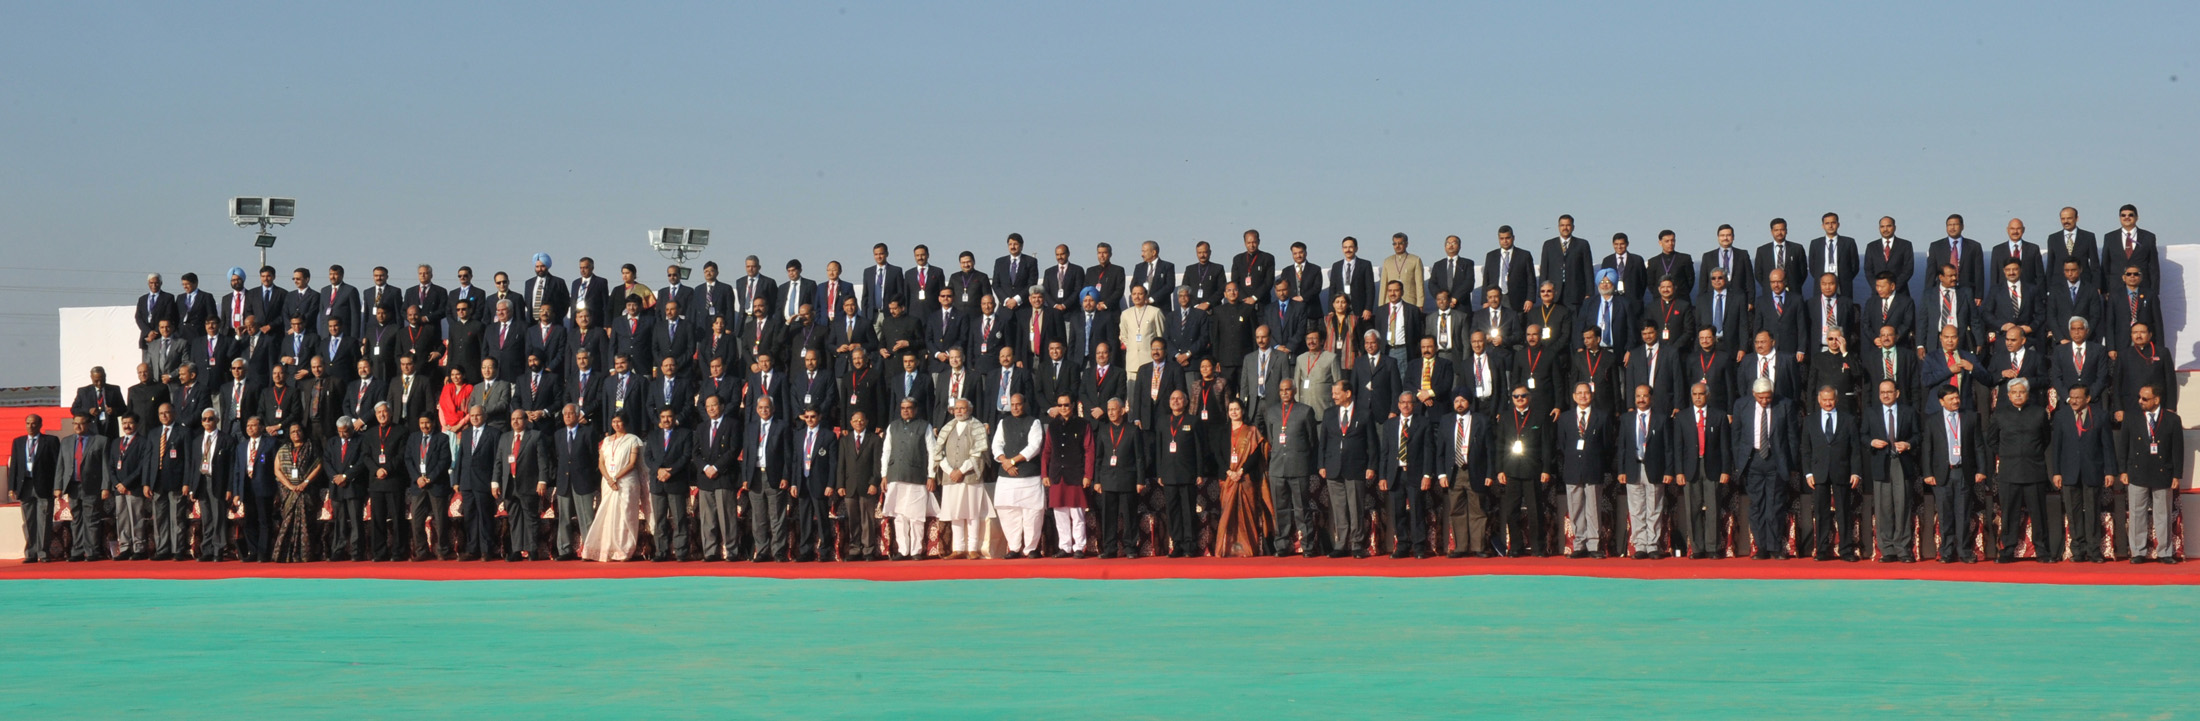 The Prime Minister, Shri Narendra Modi with delegates at the 3-day DGP Conference at Dhordo, Kutch, in Gujarat on December 19, 2015.